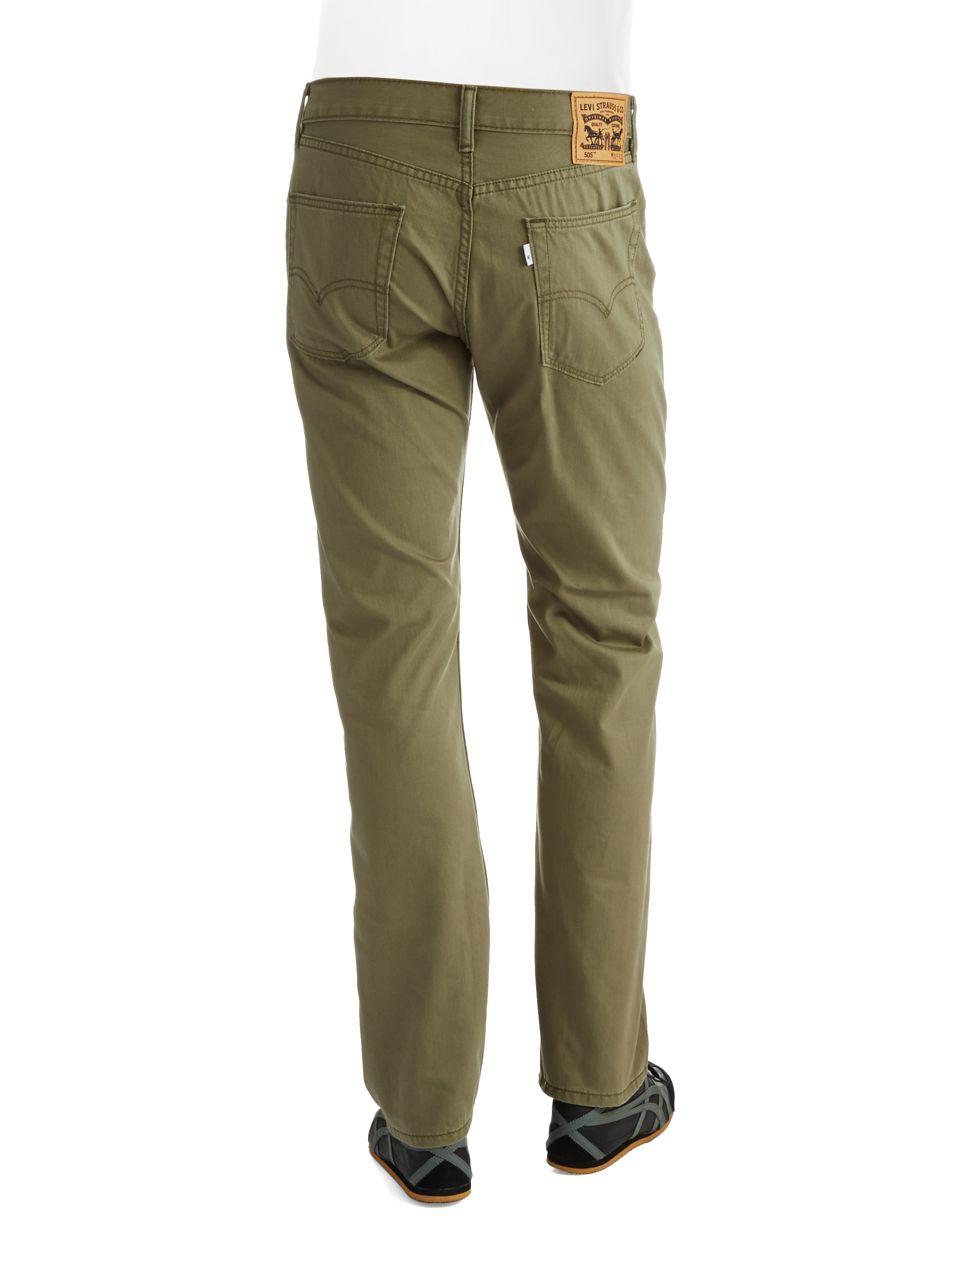 Levi's Denim 505 Regular Fit Green Jeans for Men - Lyst